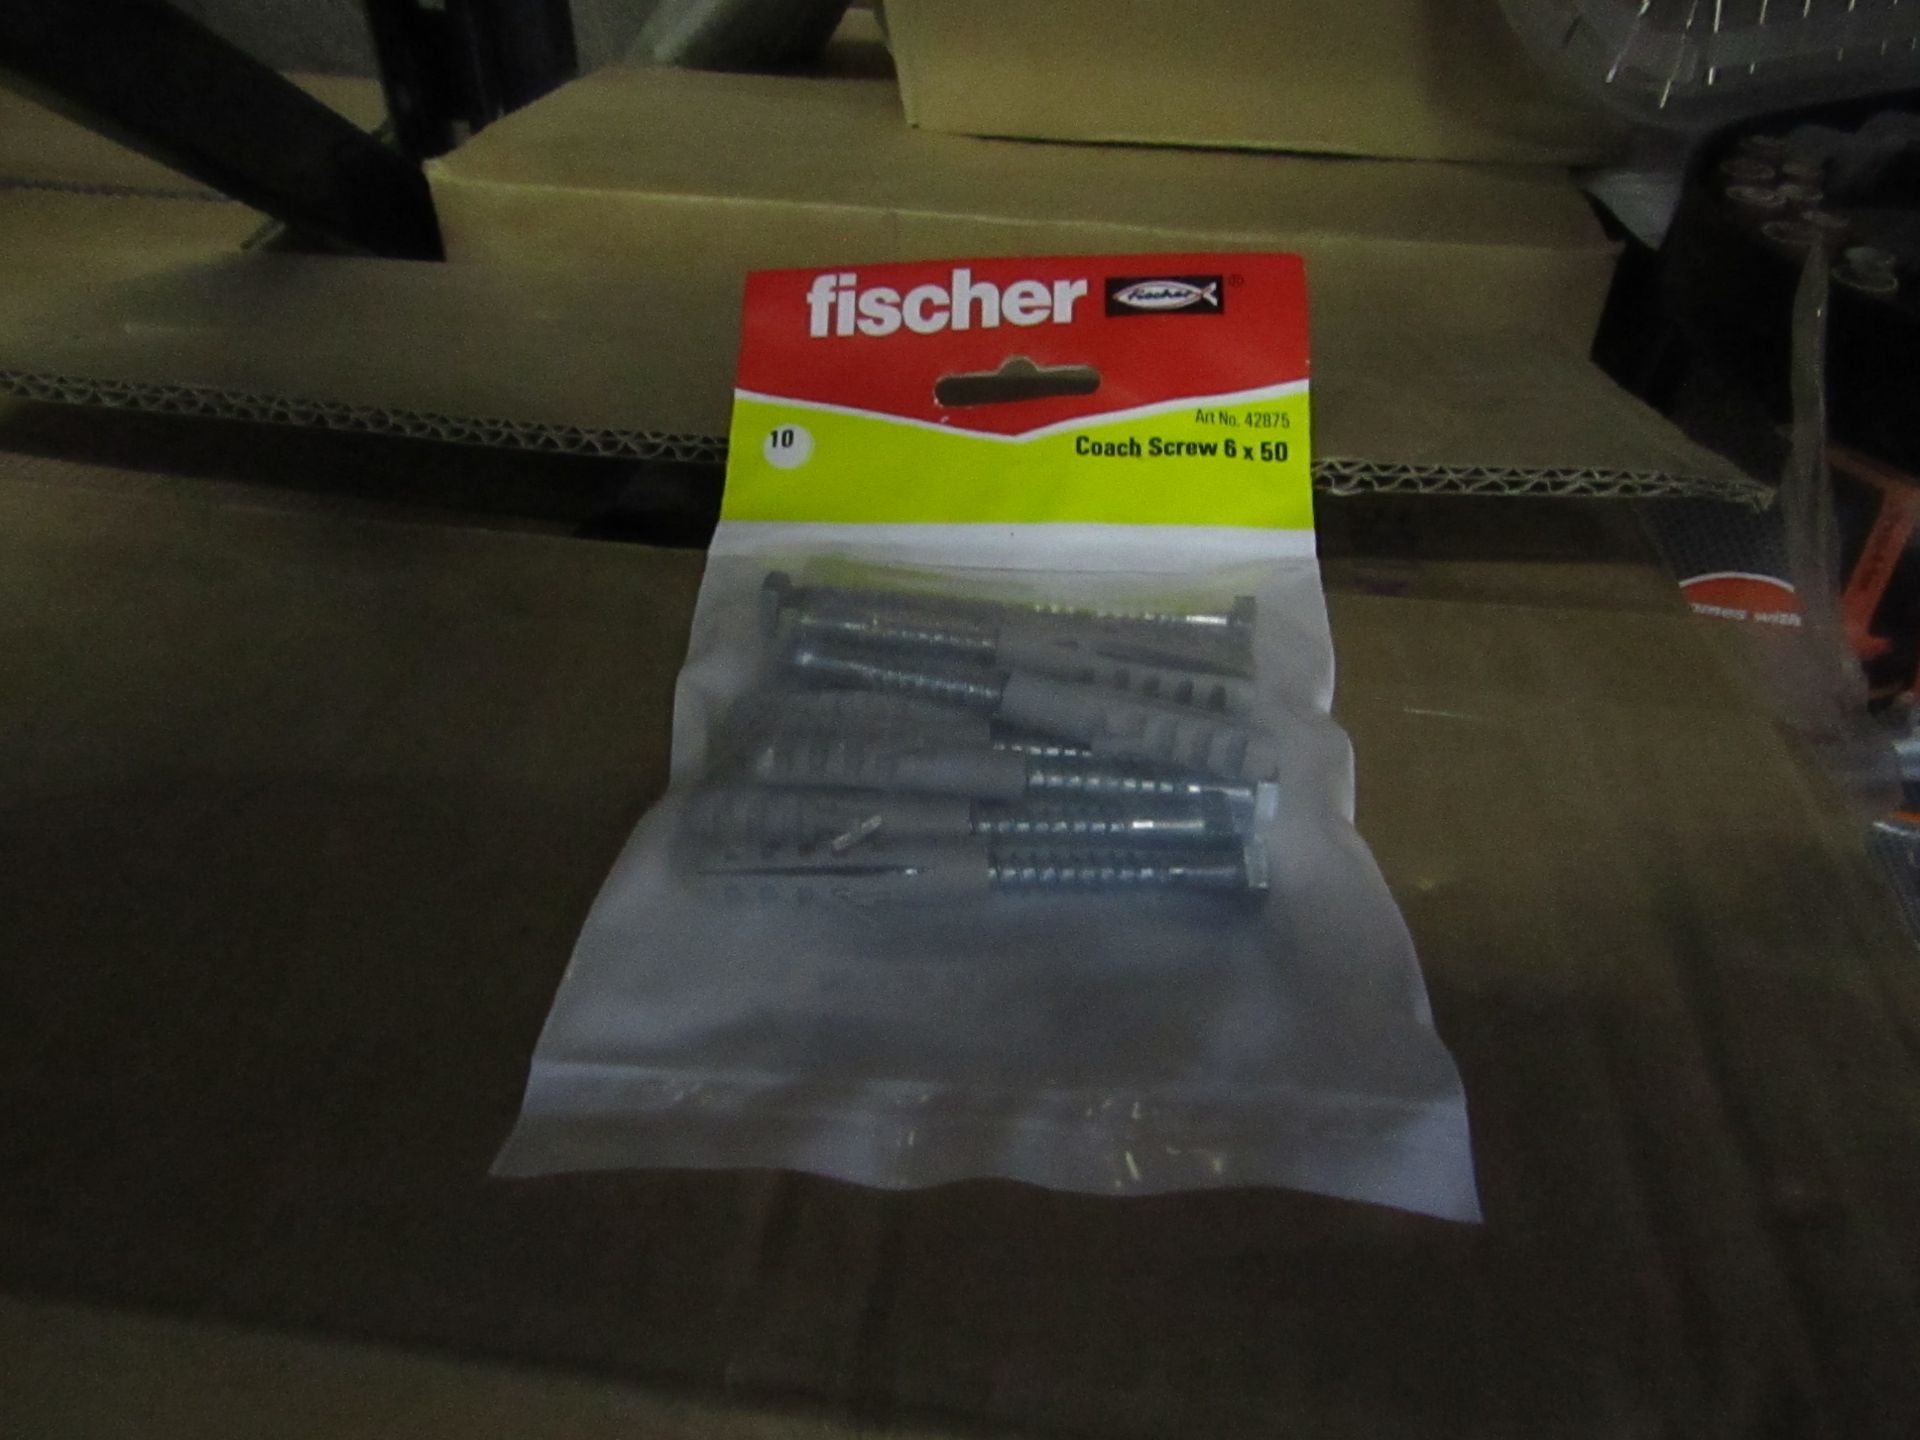 10x Fischer - Coach Screw 6 x 50 (Packs of 10) - New & Packaged.